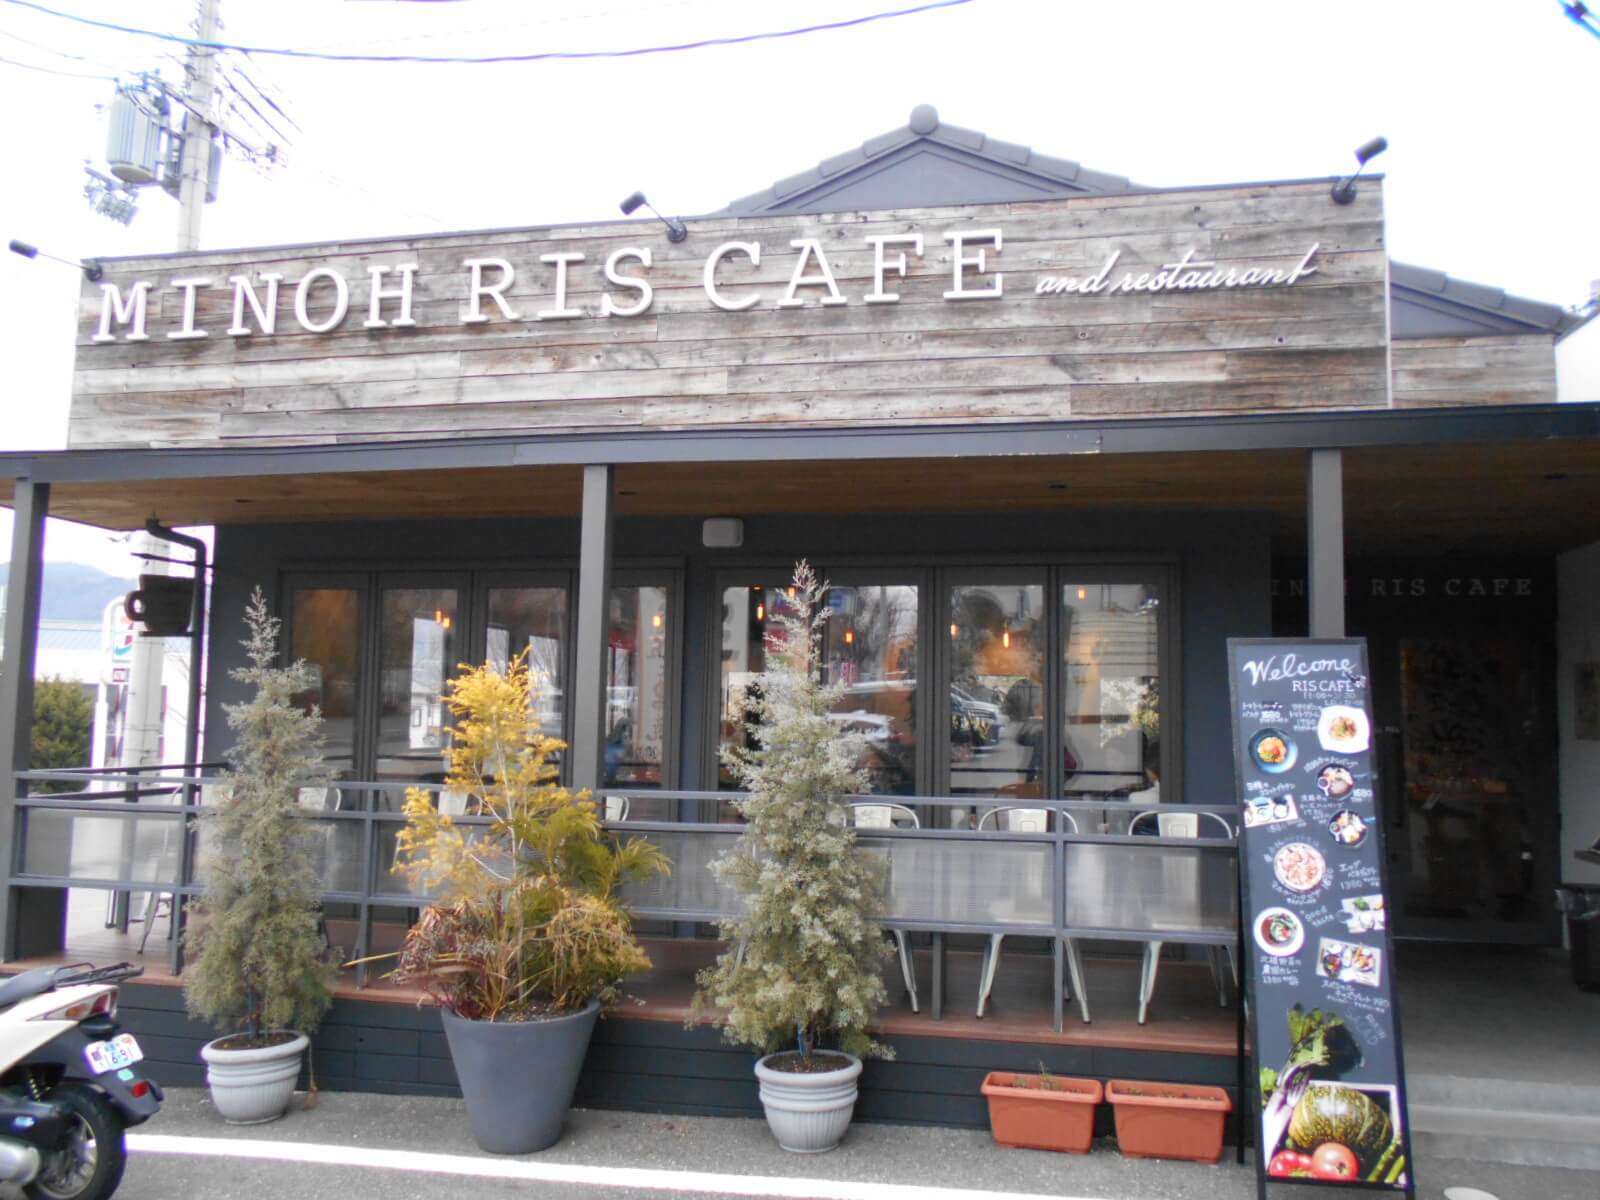 MINOH RIS CAFE